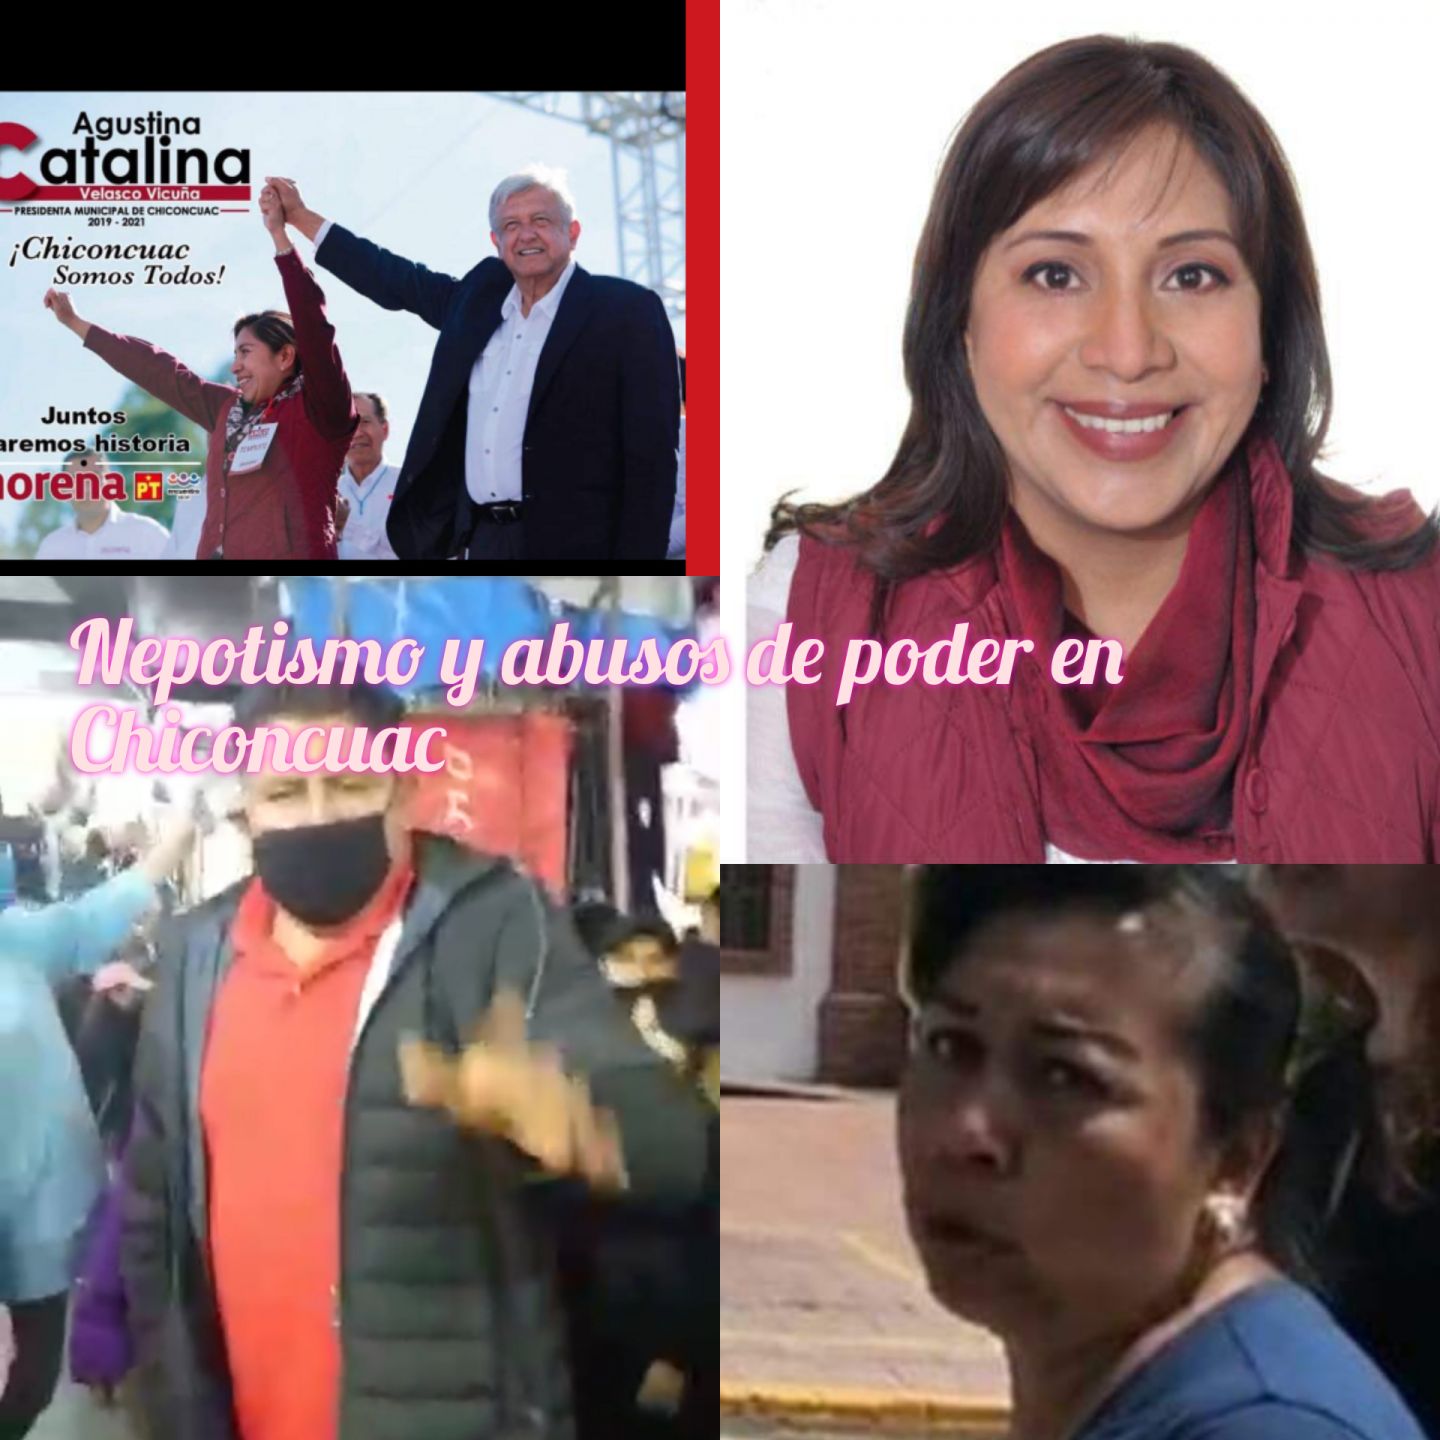 Ya basta de corrupción, nepotismo e inseguridad en Chiconcuac gobernado Catalina Velasco 